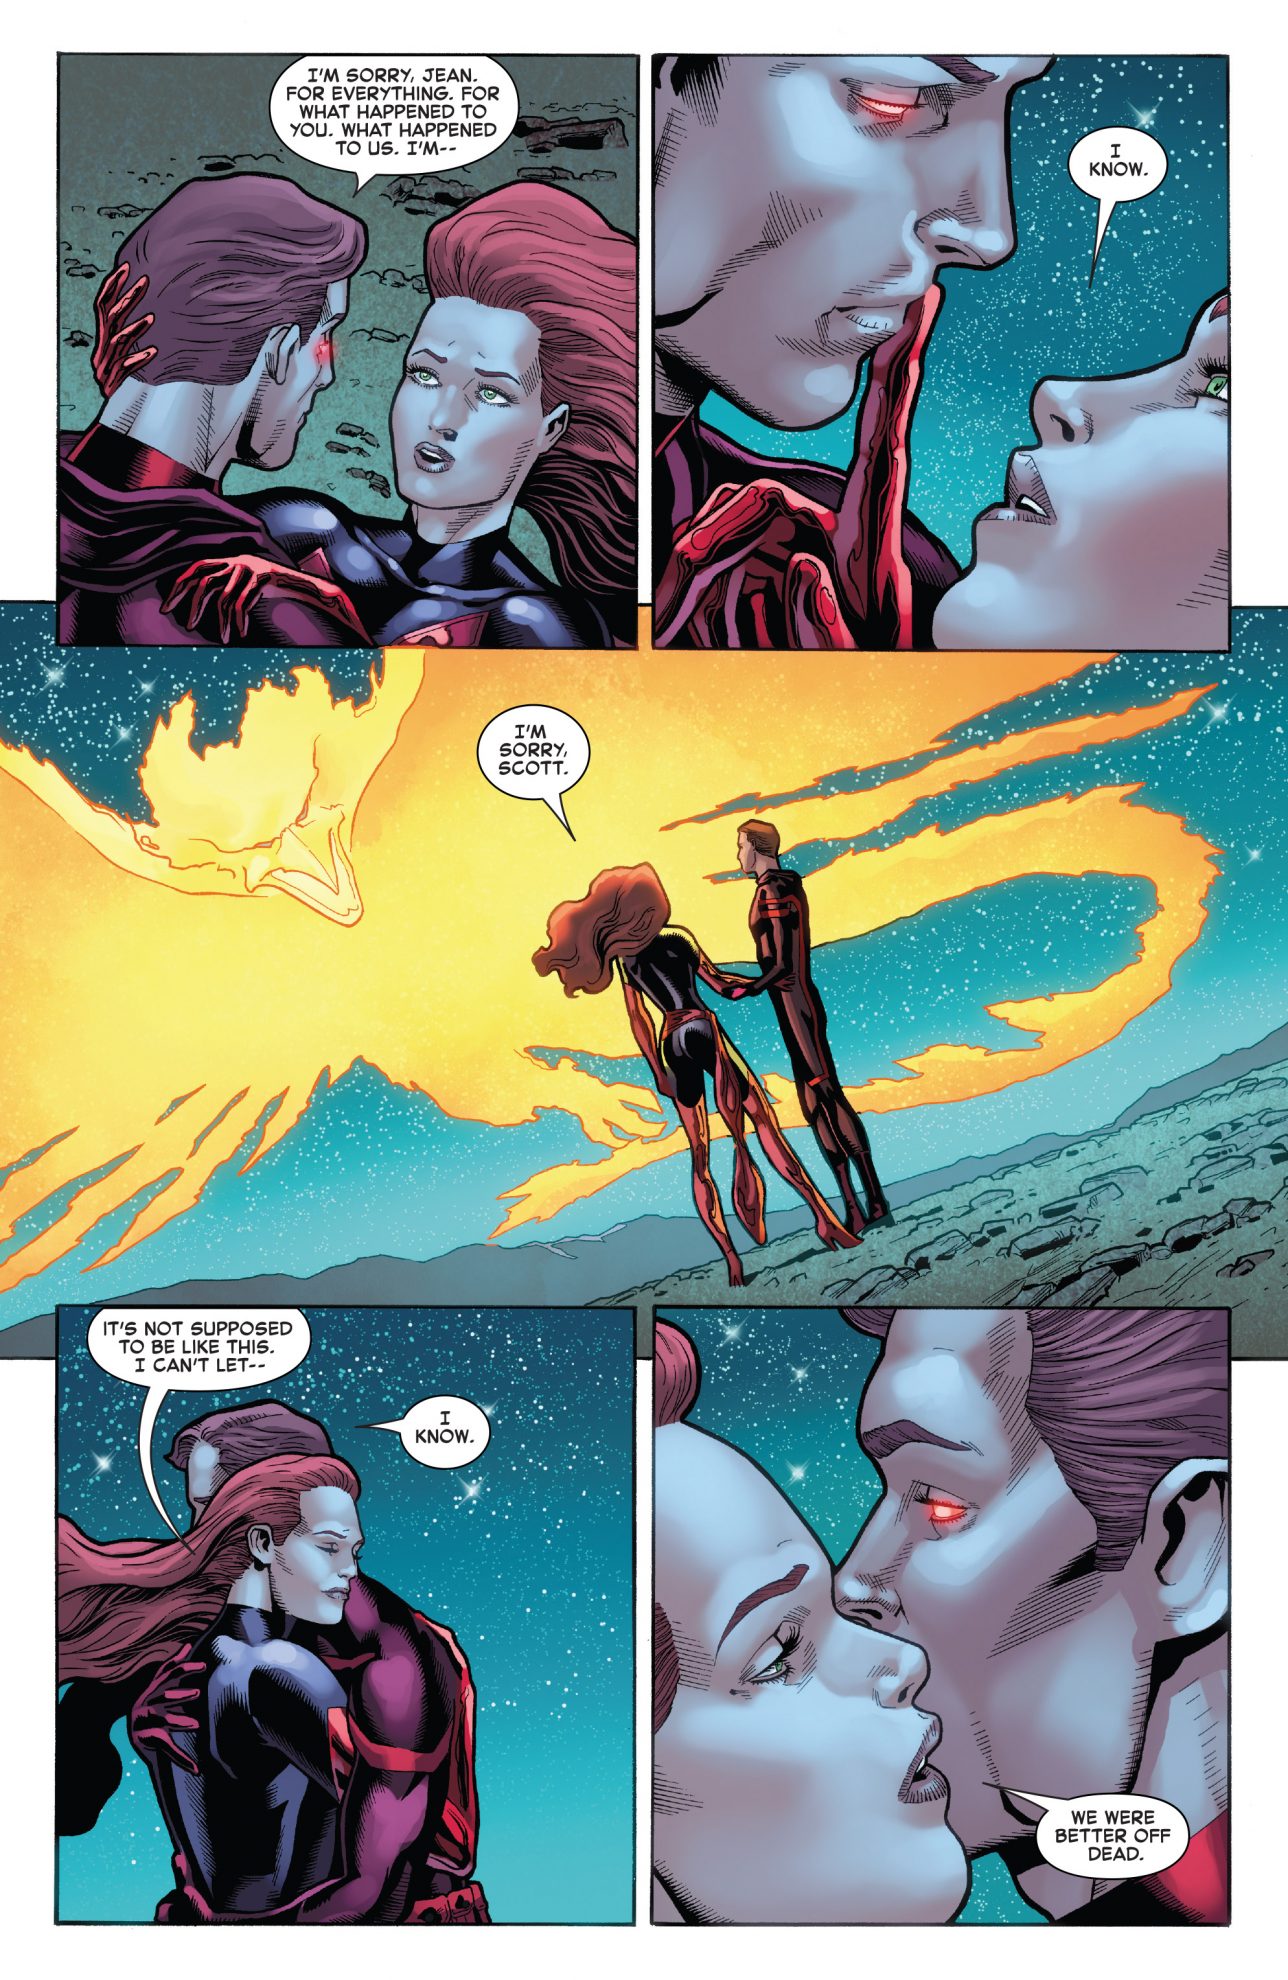 Cyclops And Jean Grey Reunion (Phoenix Resurrection)